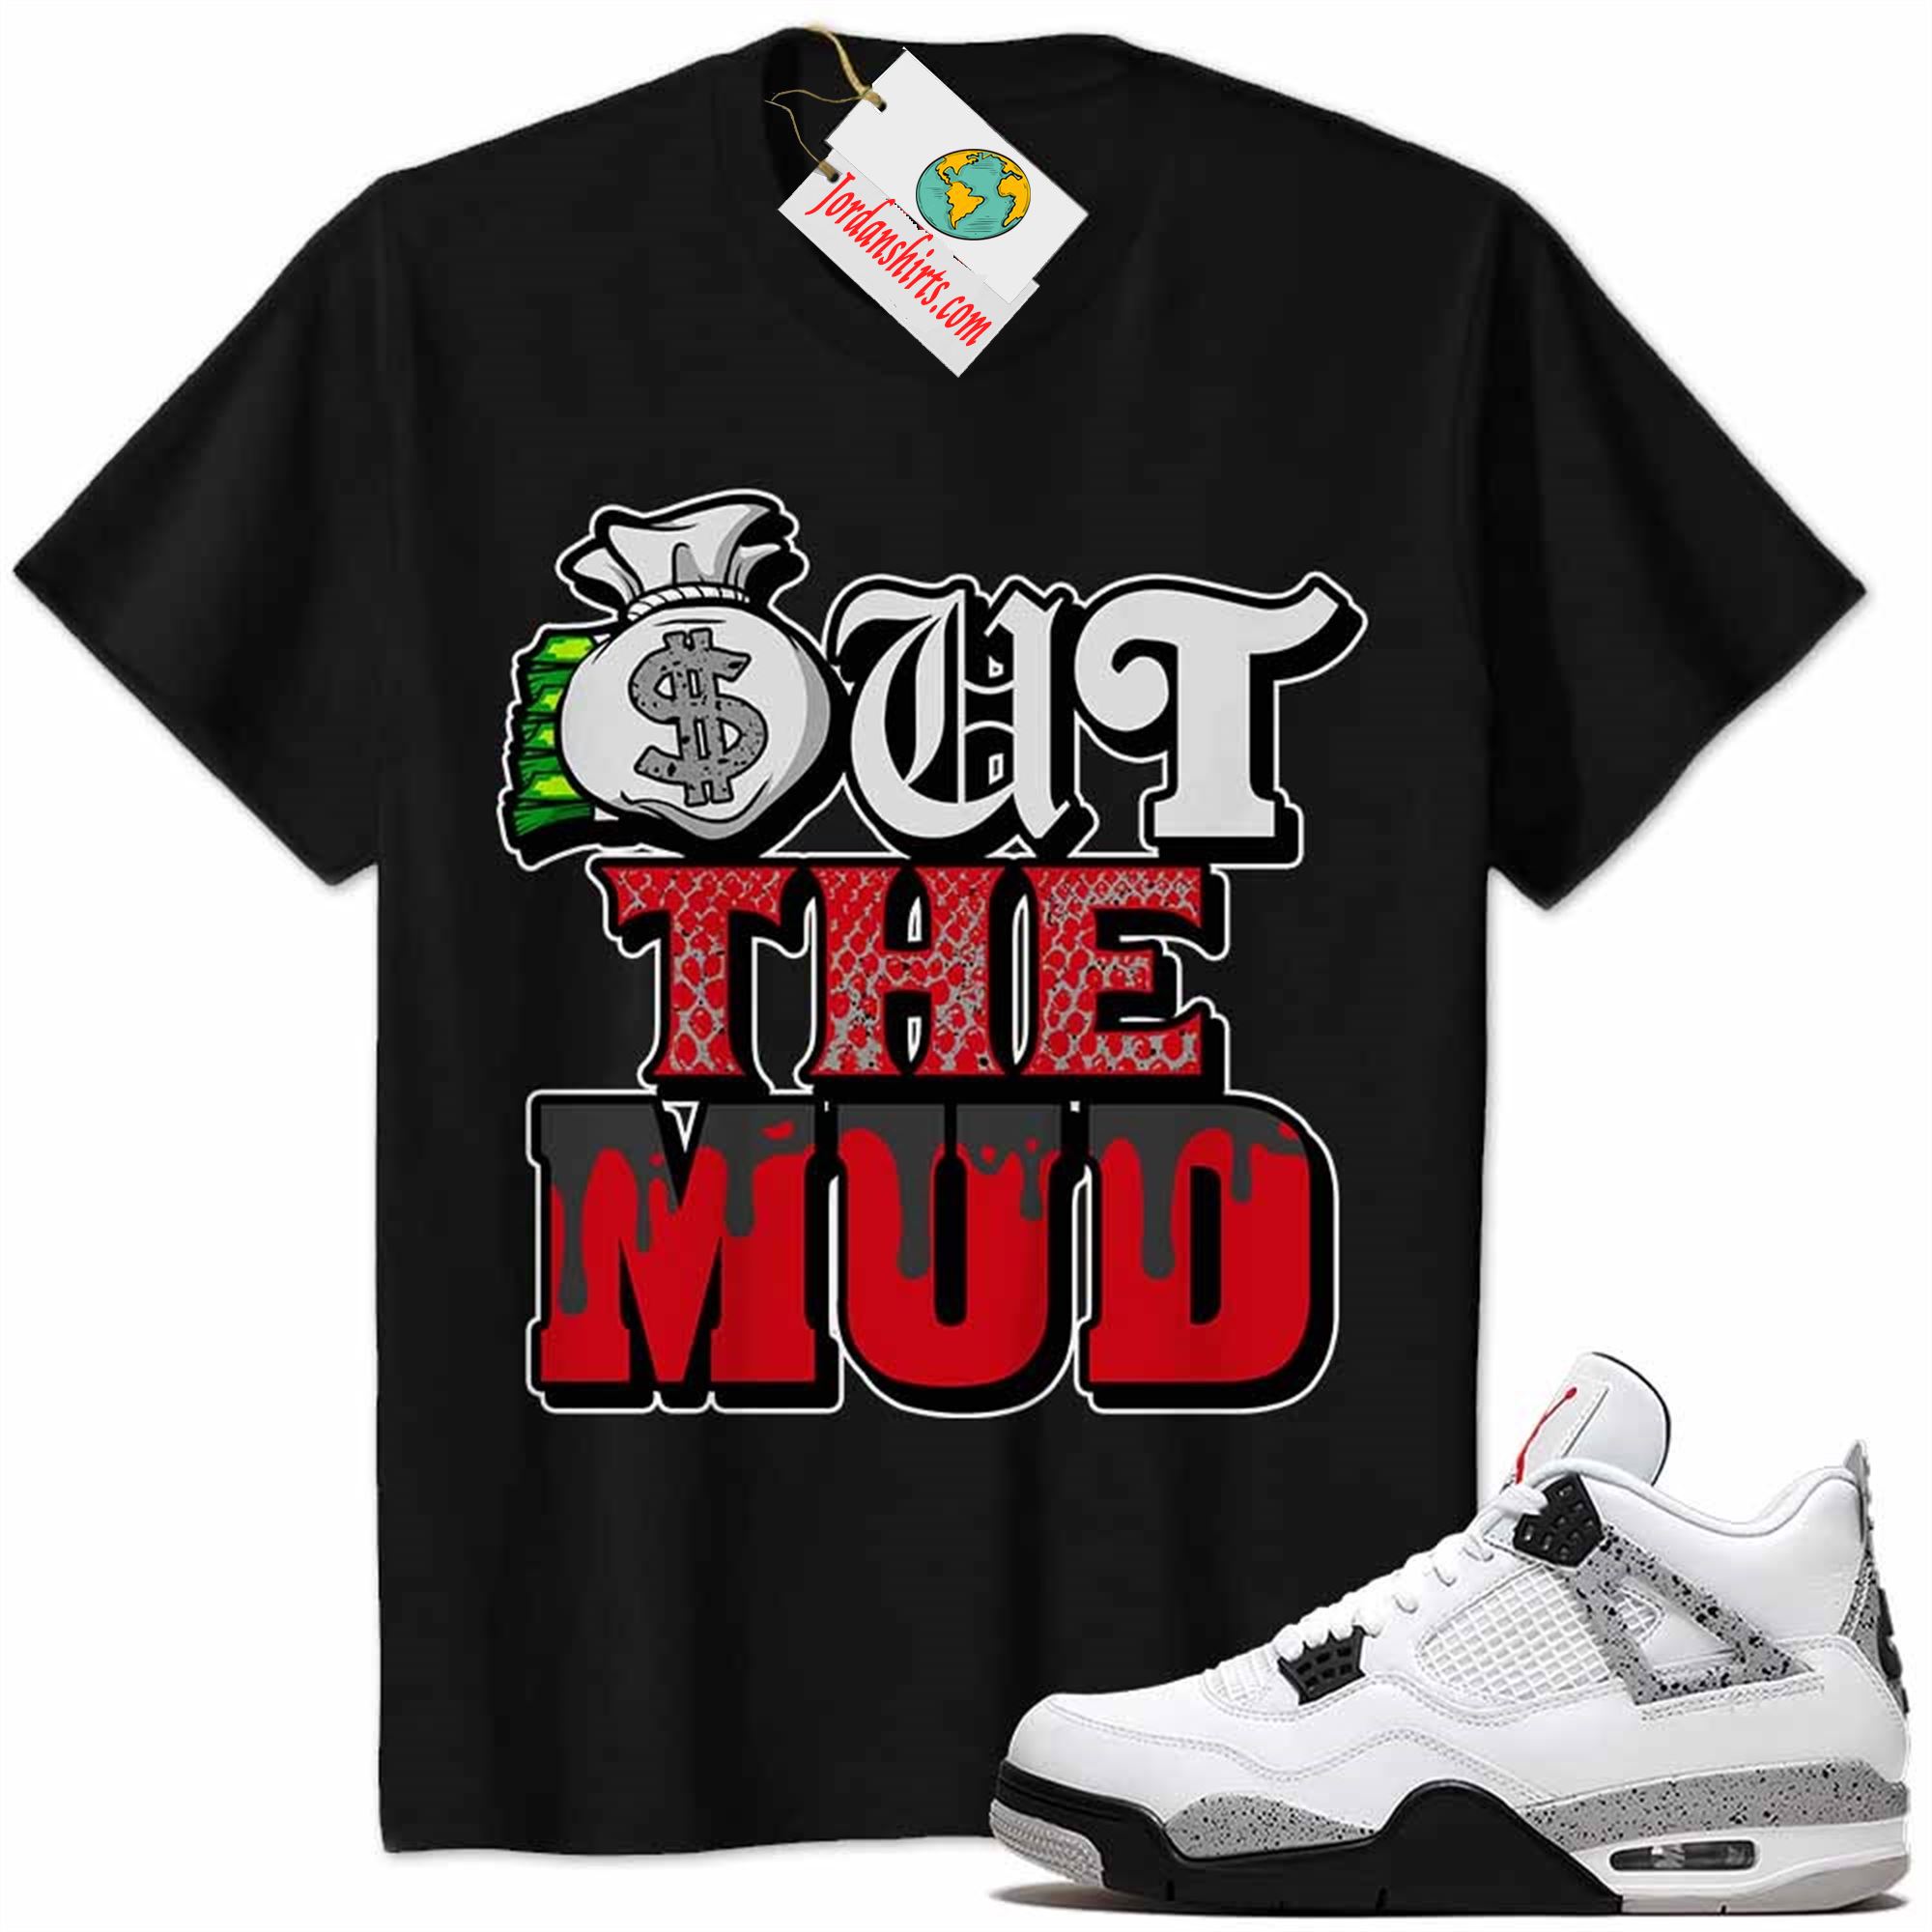 Jordan 4 Shirt, Jordan 4 Cement Shirt Out The Mud Money Bag Black Plus Size Up To 5xl